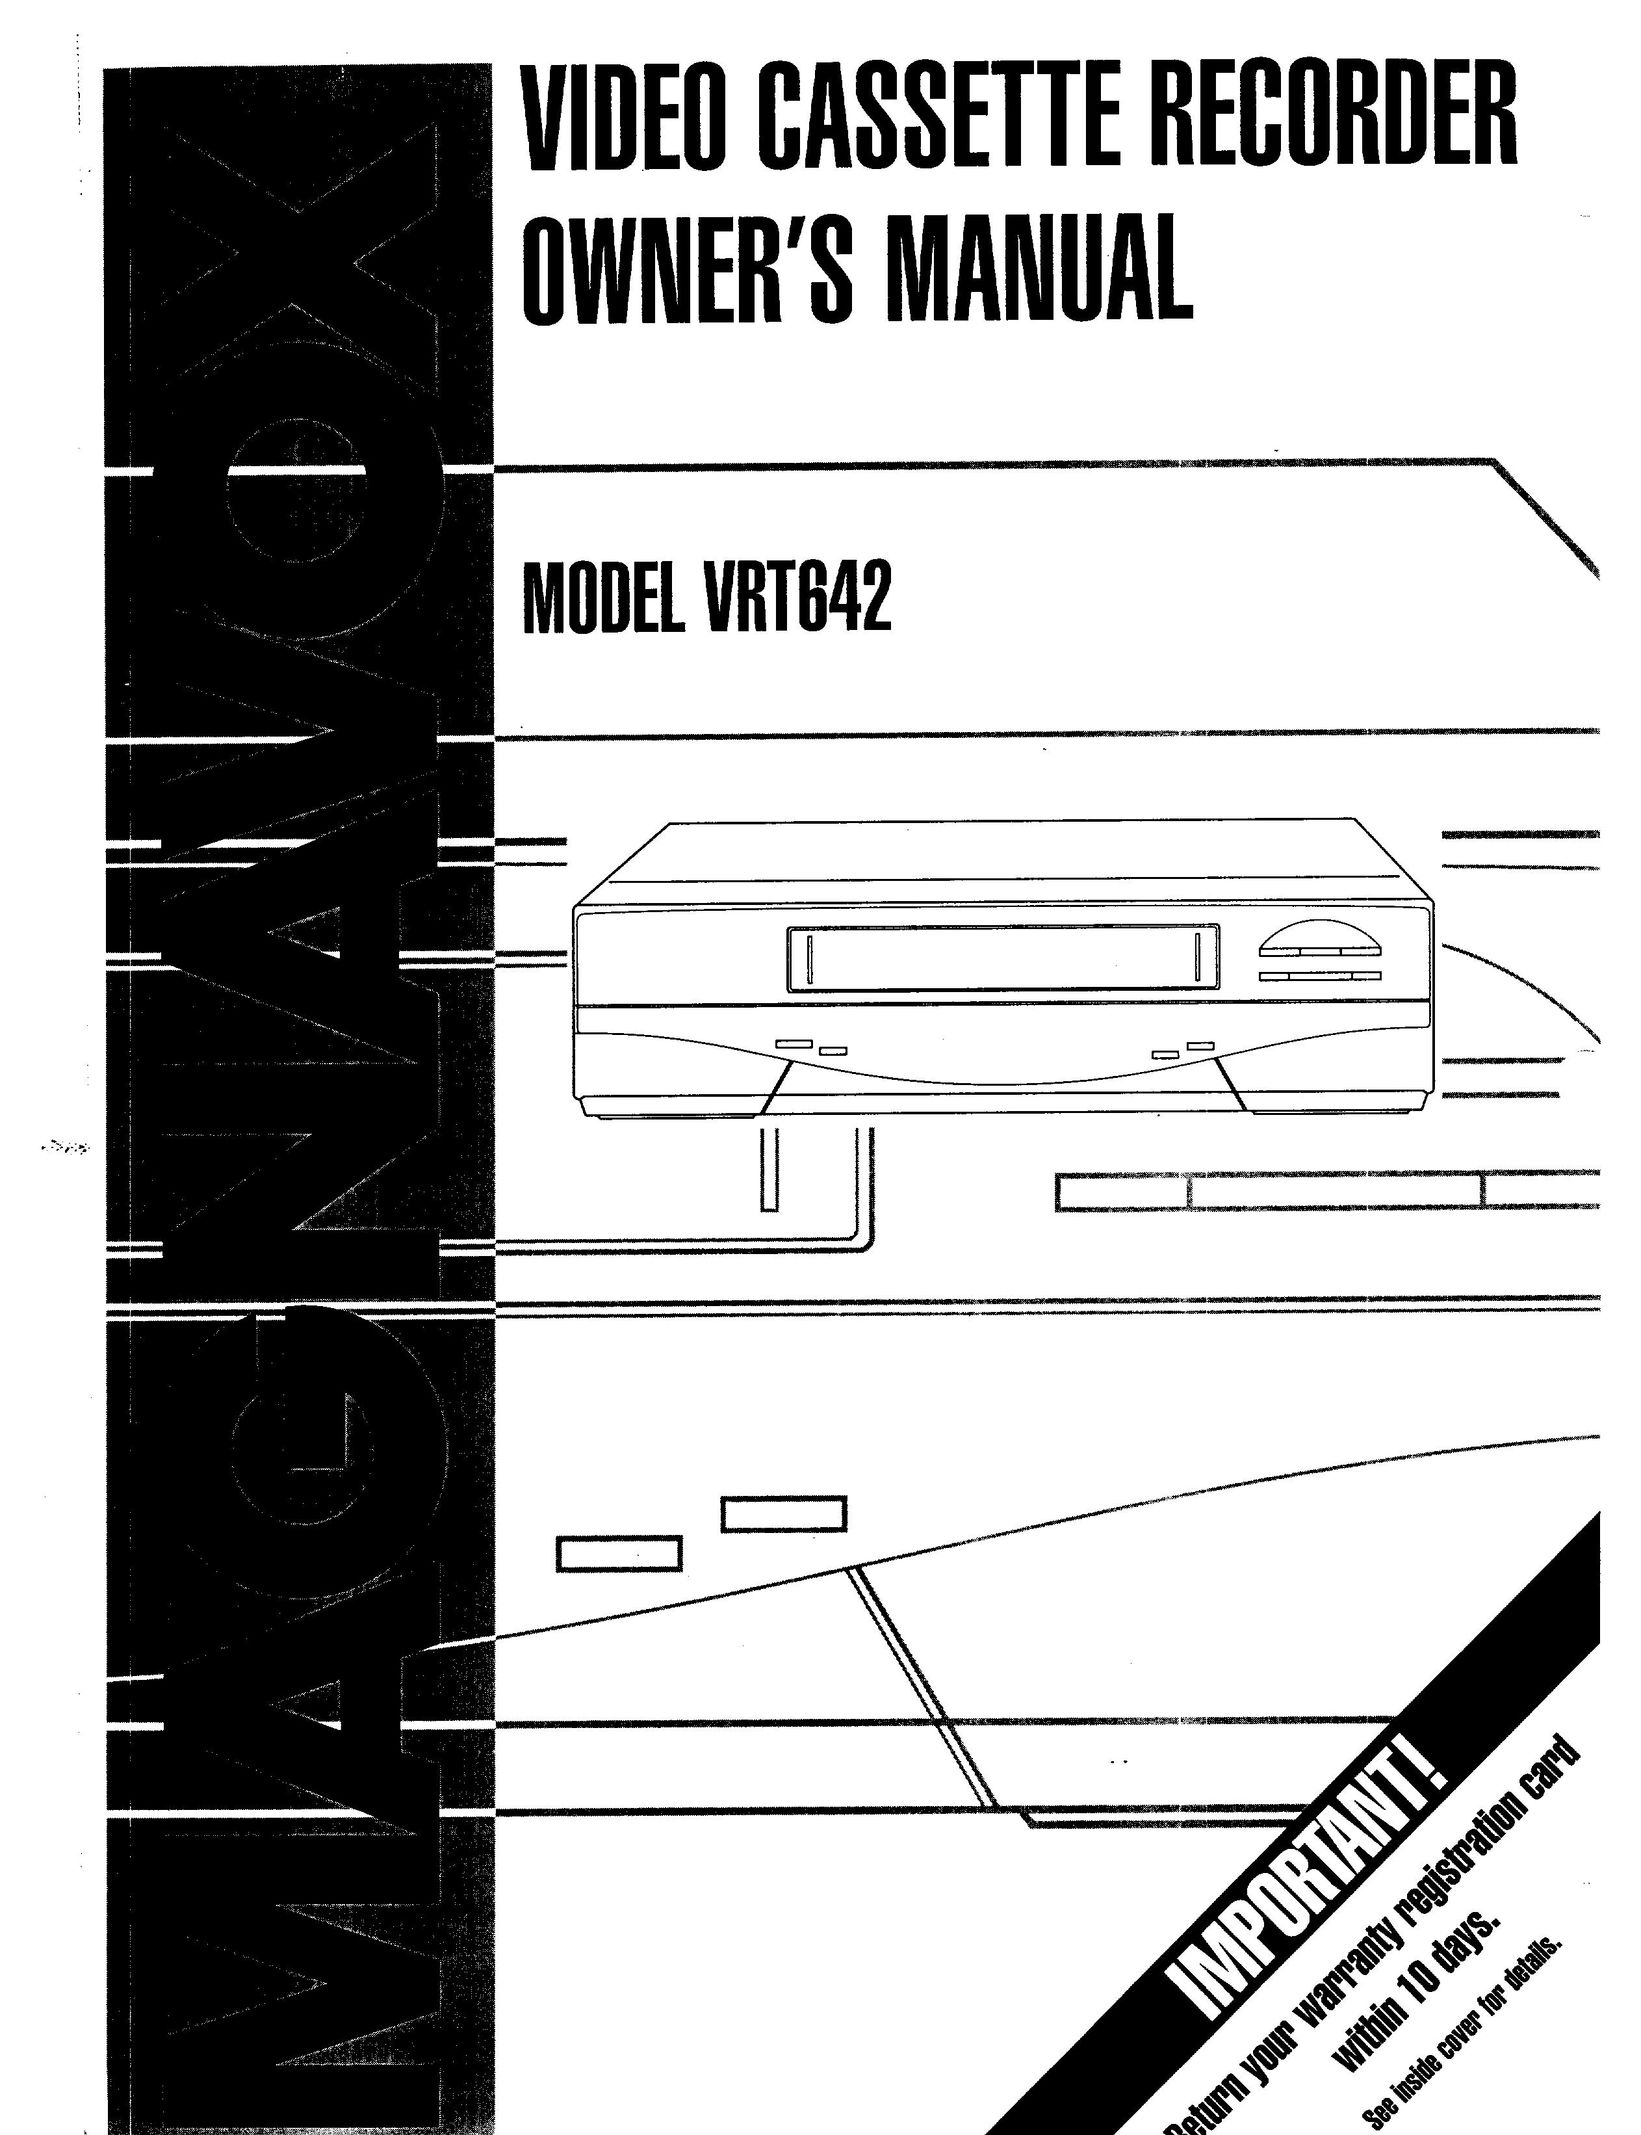 Magnavox VRT642 VCR User Manual